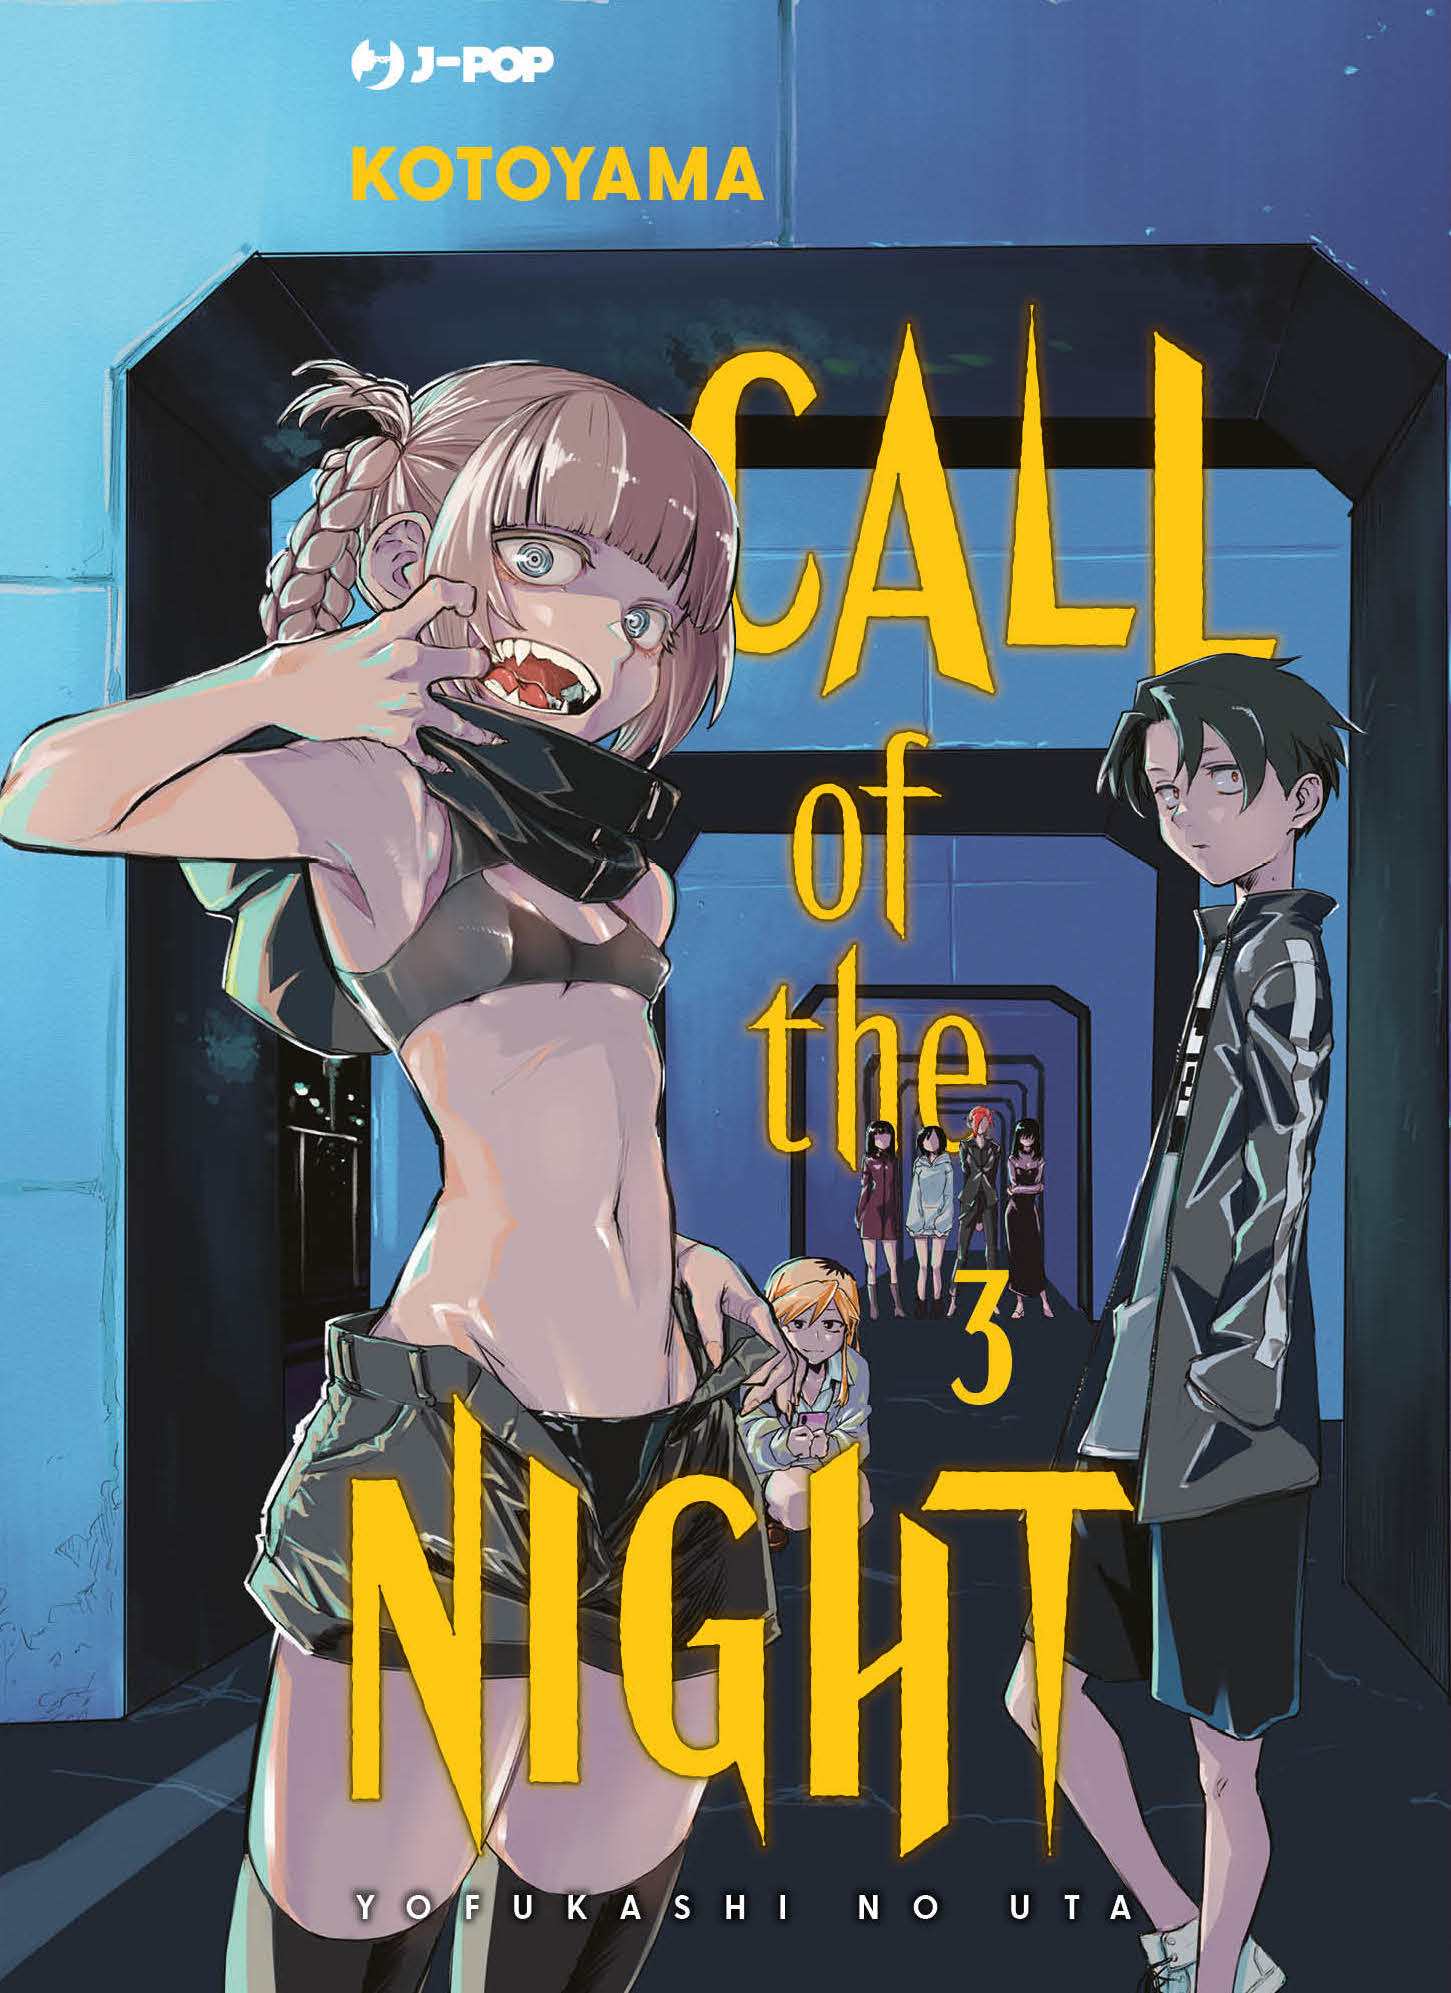 JPOP CALL OF THE NIGHT #003